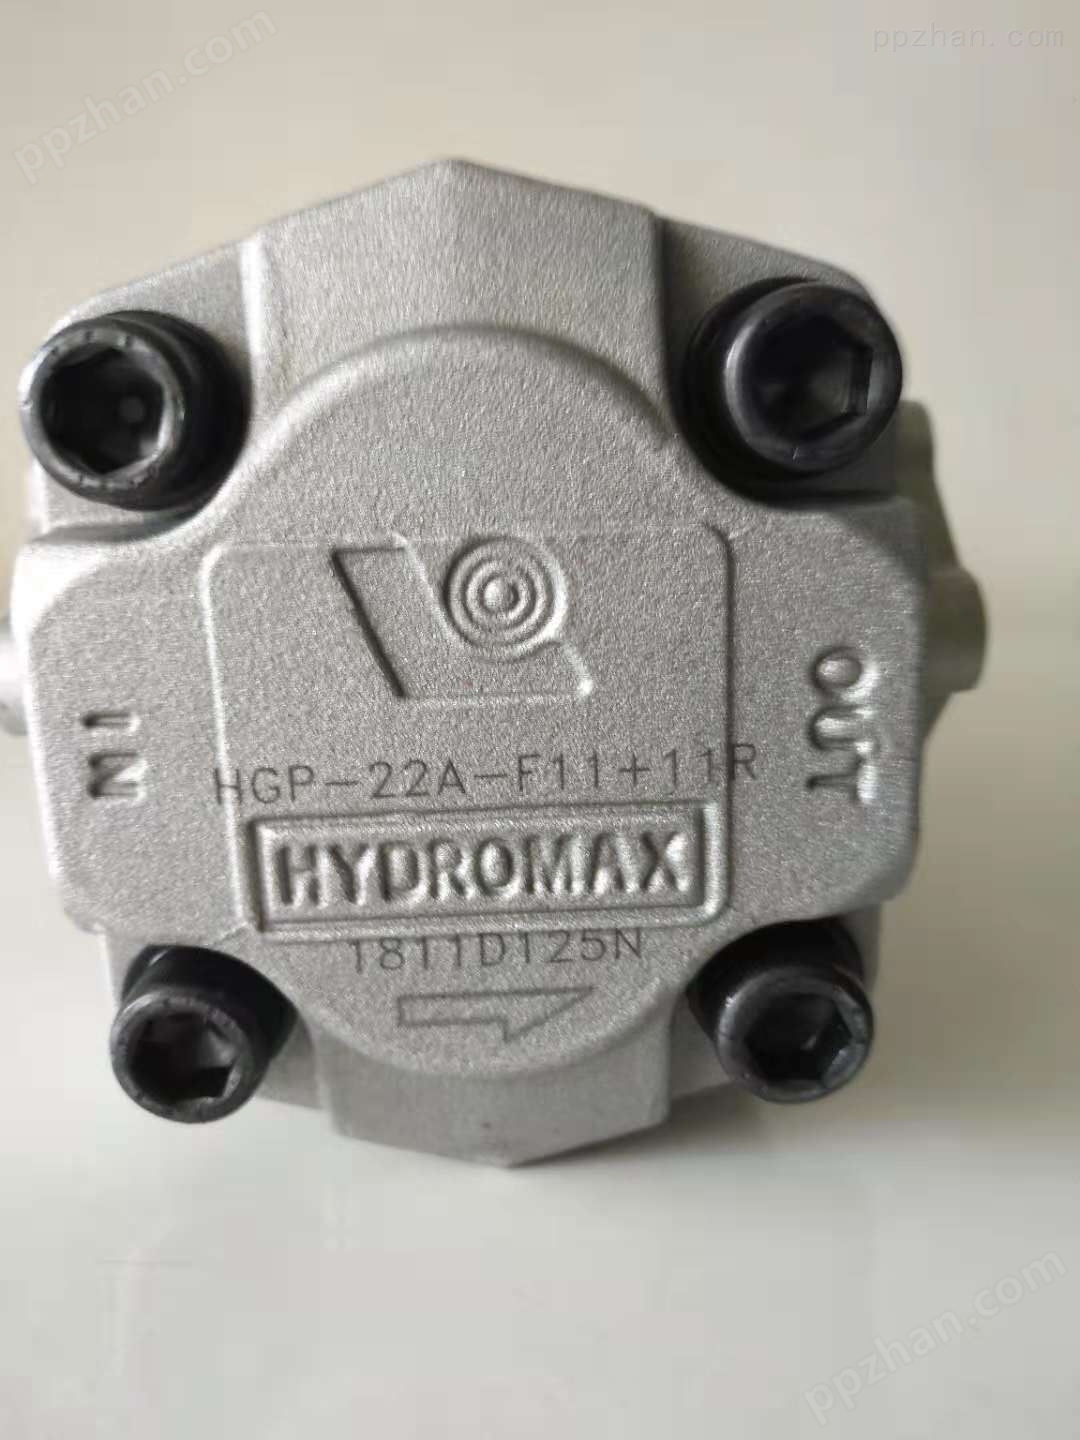 售HGP-22A-L44L（液压泵）